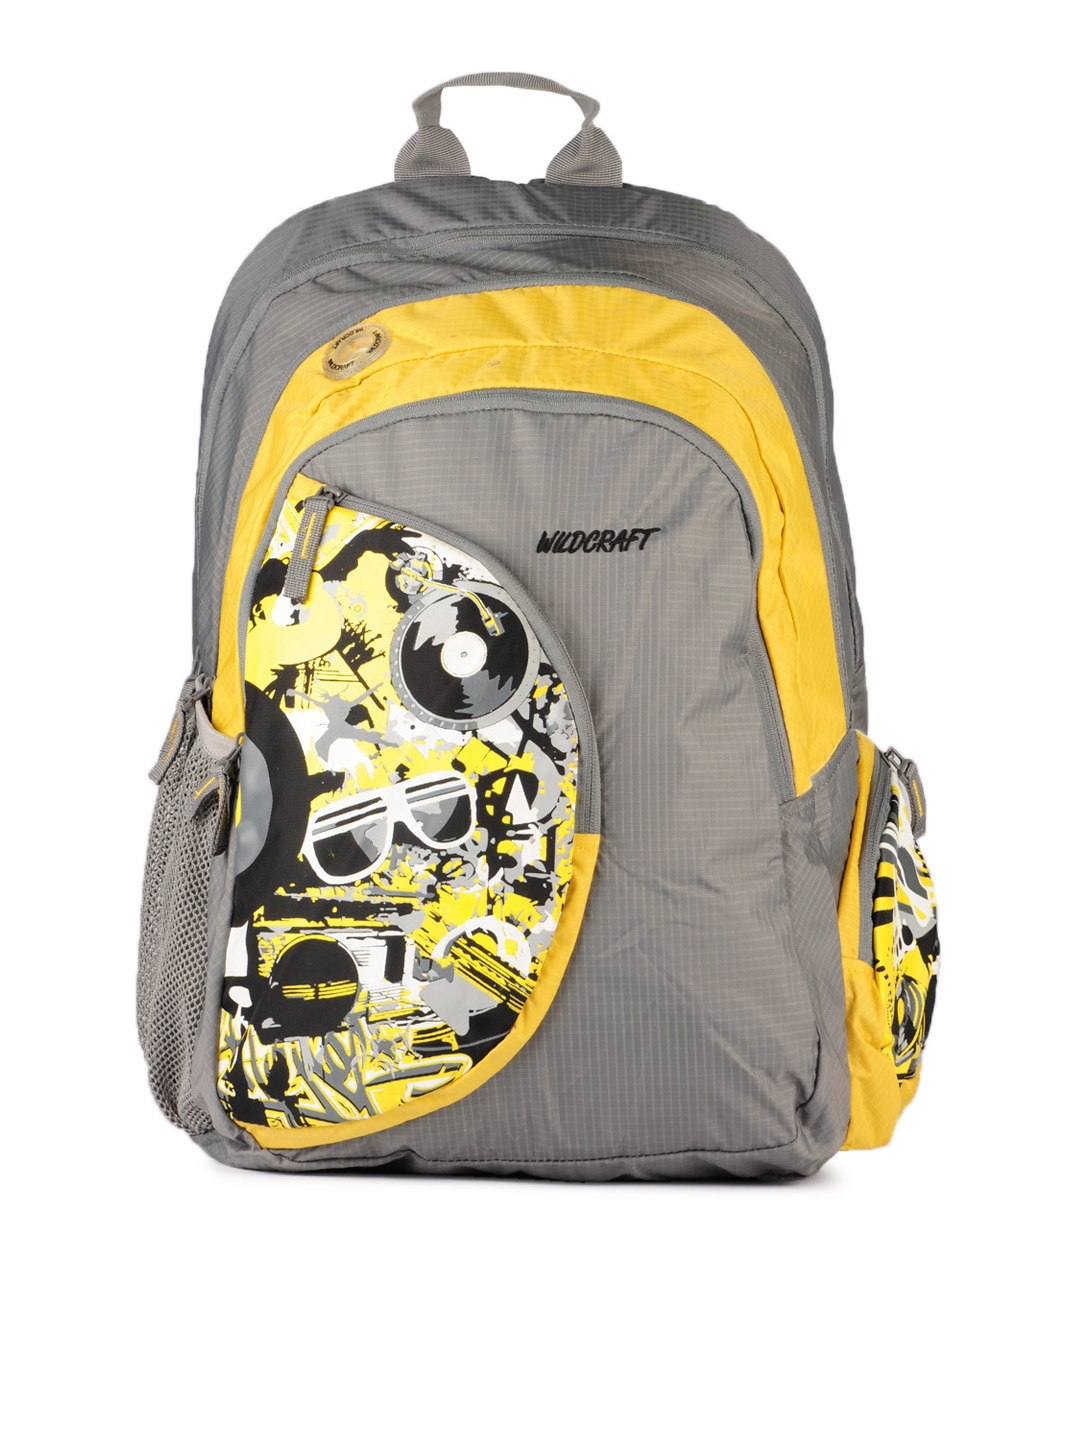 Wildcraft Unisex Grey & Yellow Printed Laptop Backpack